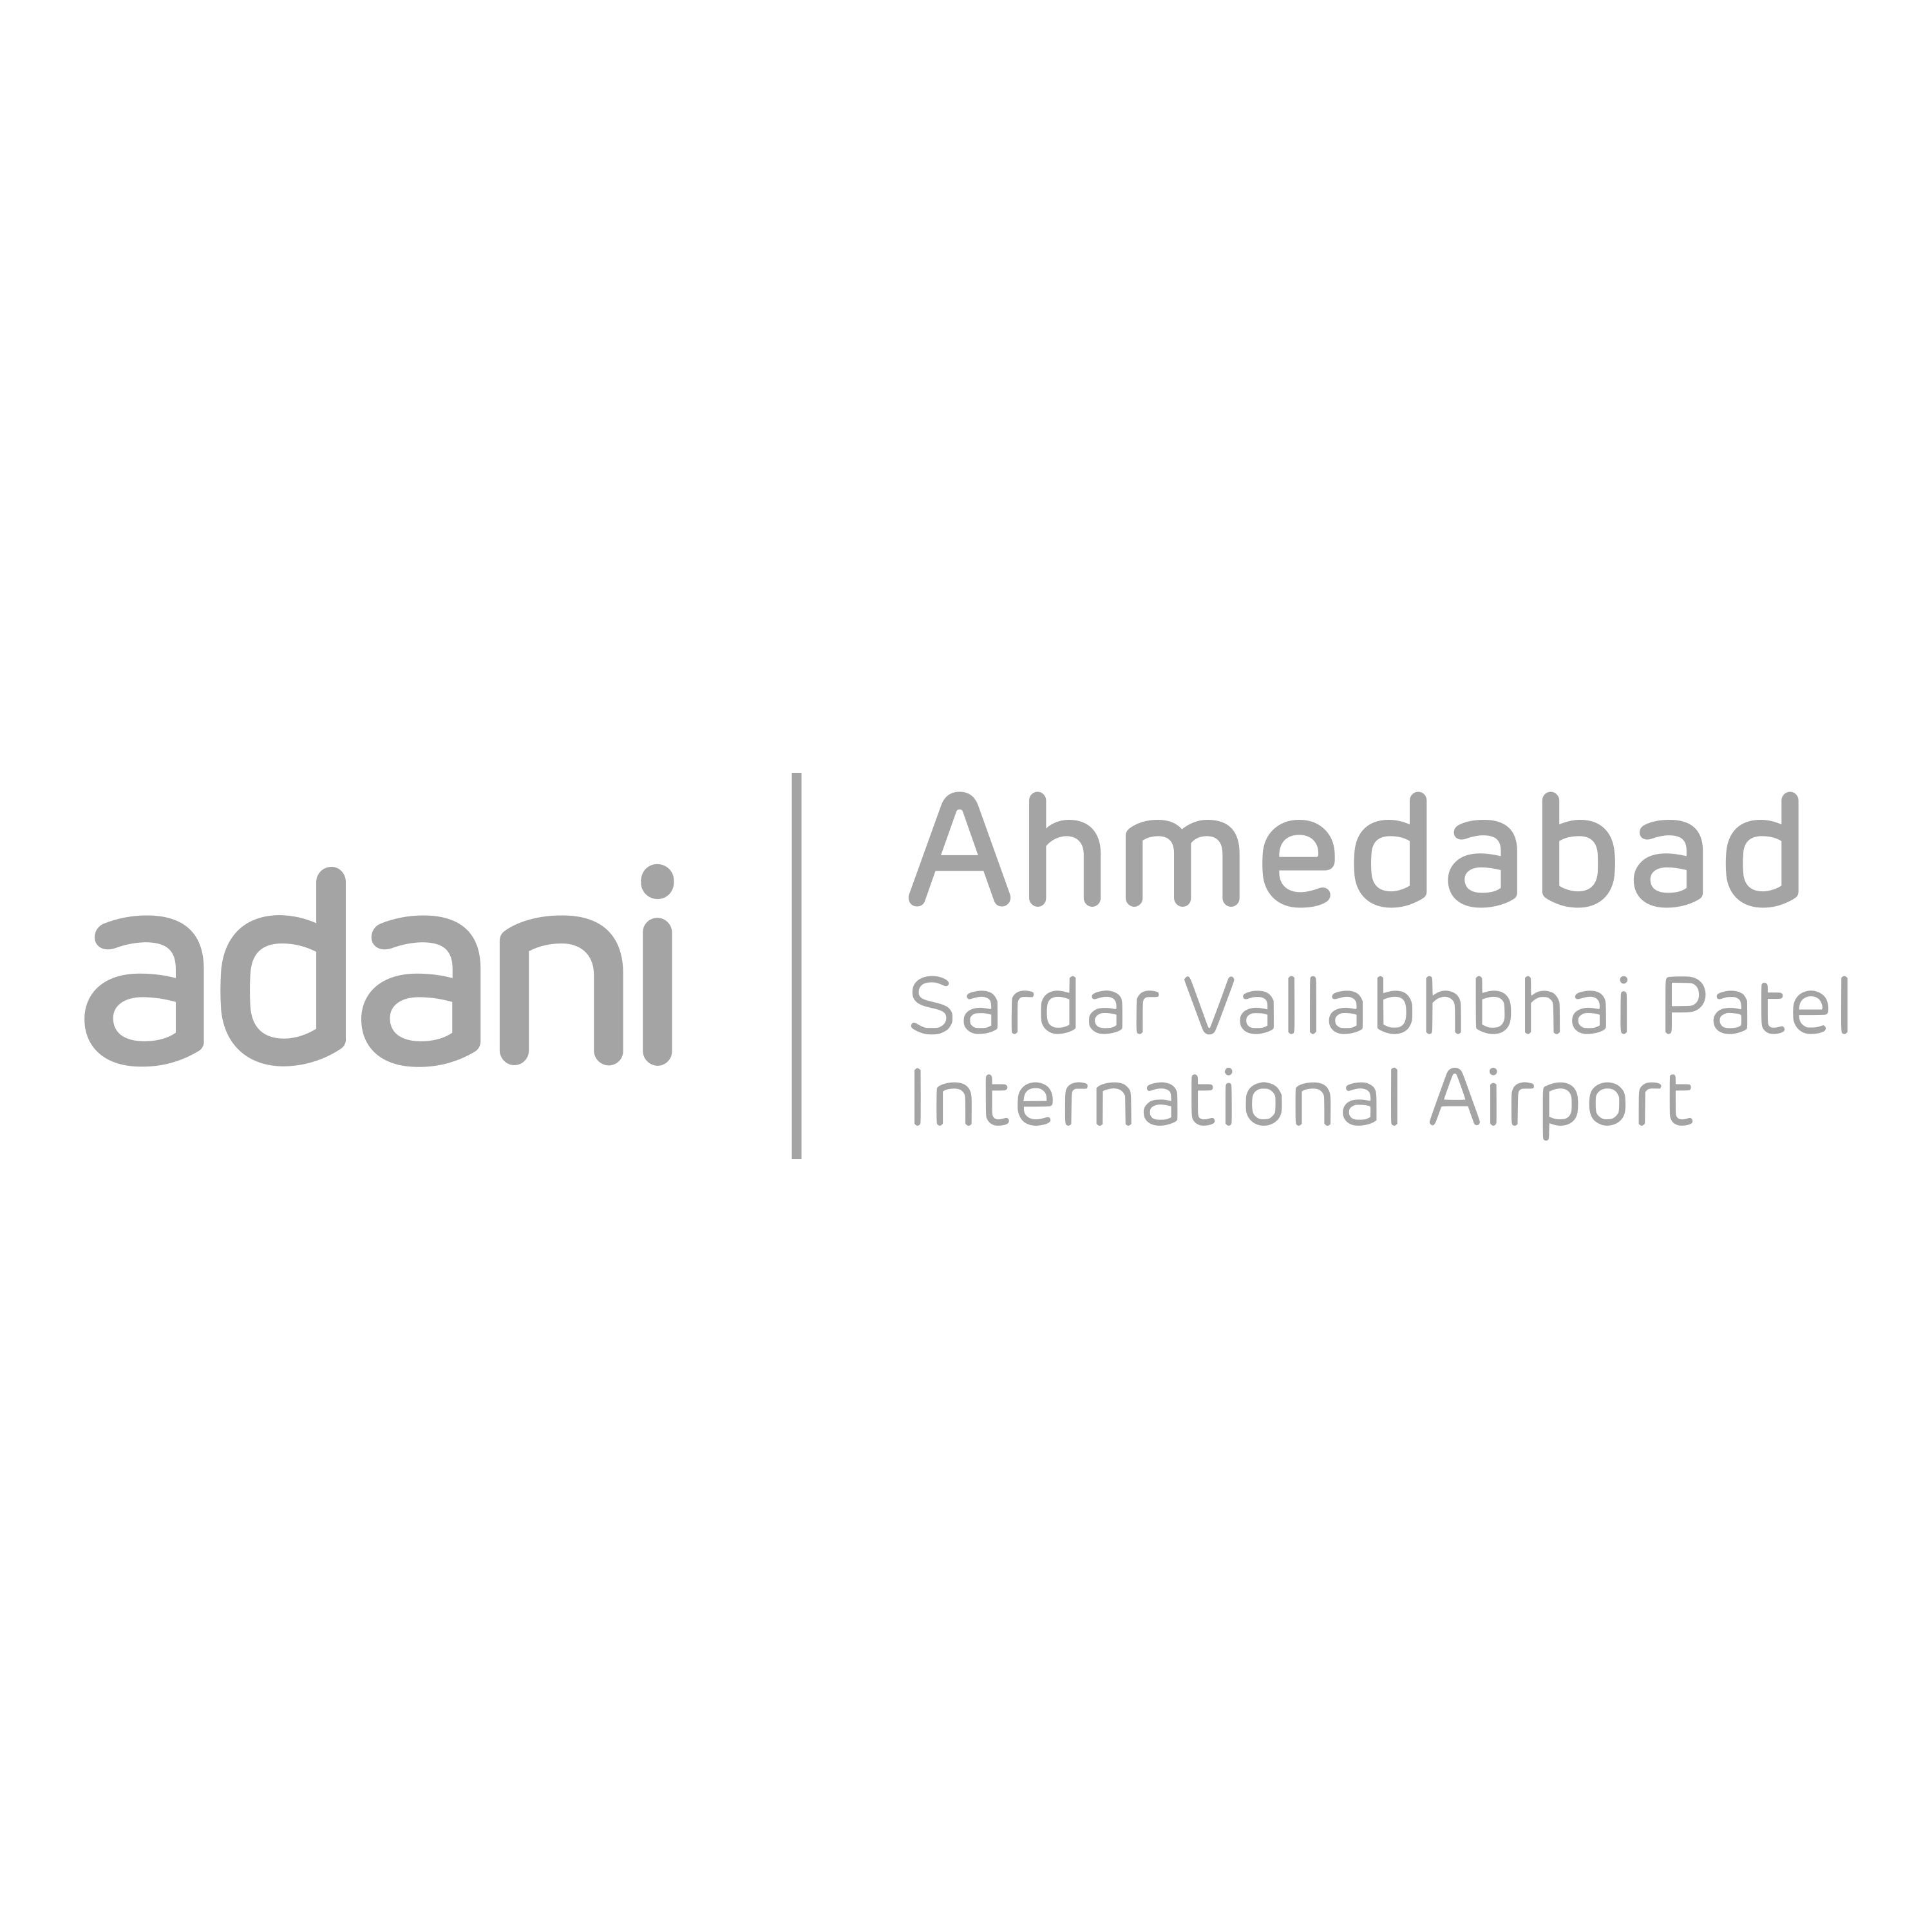 Ahmedabad Airport Logo Transparent Picture